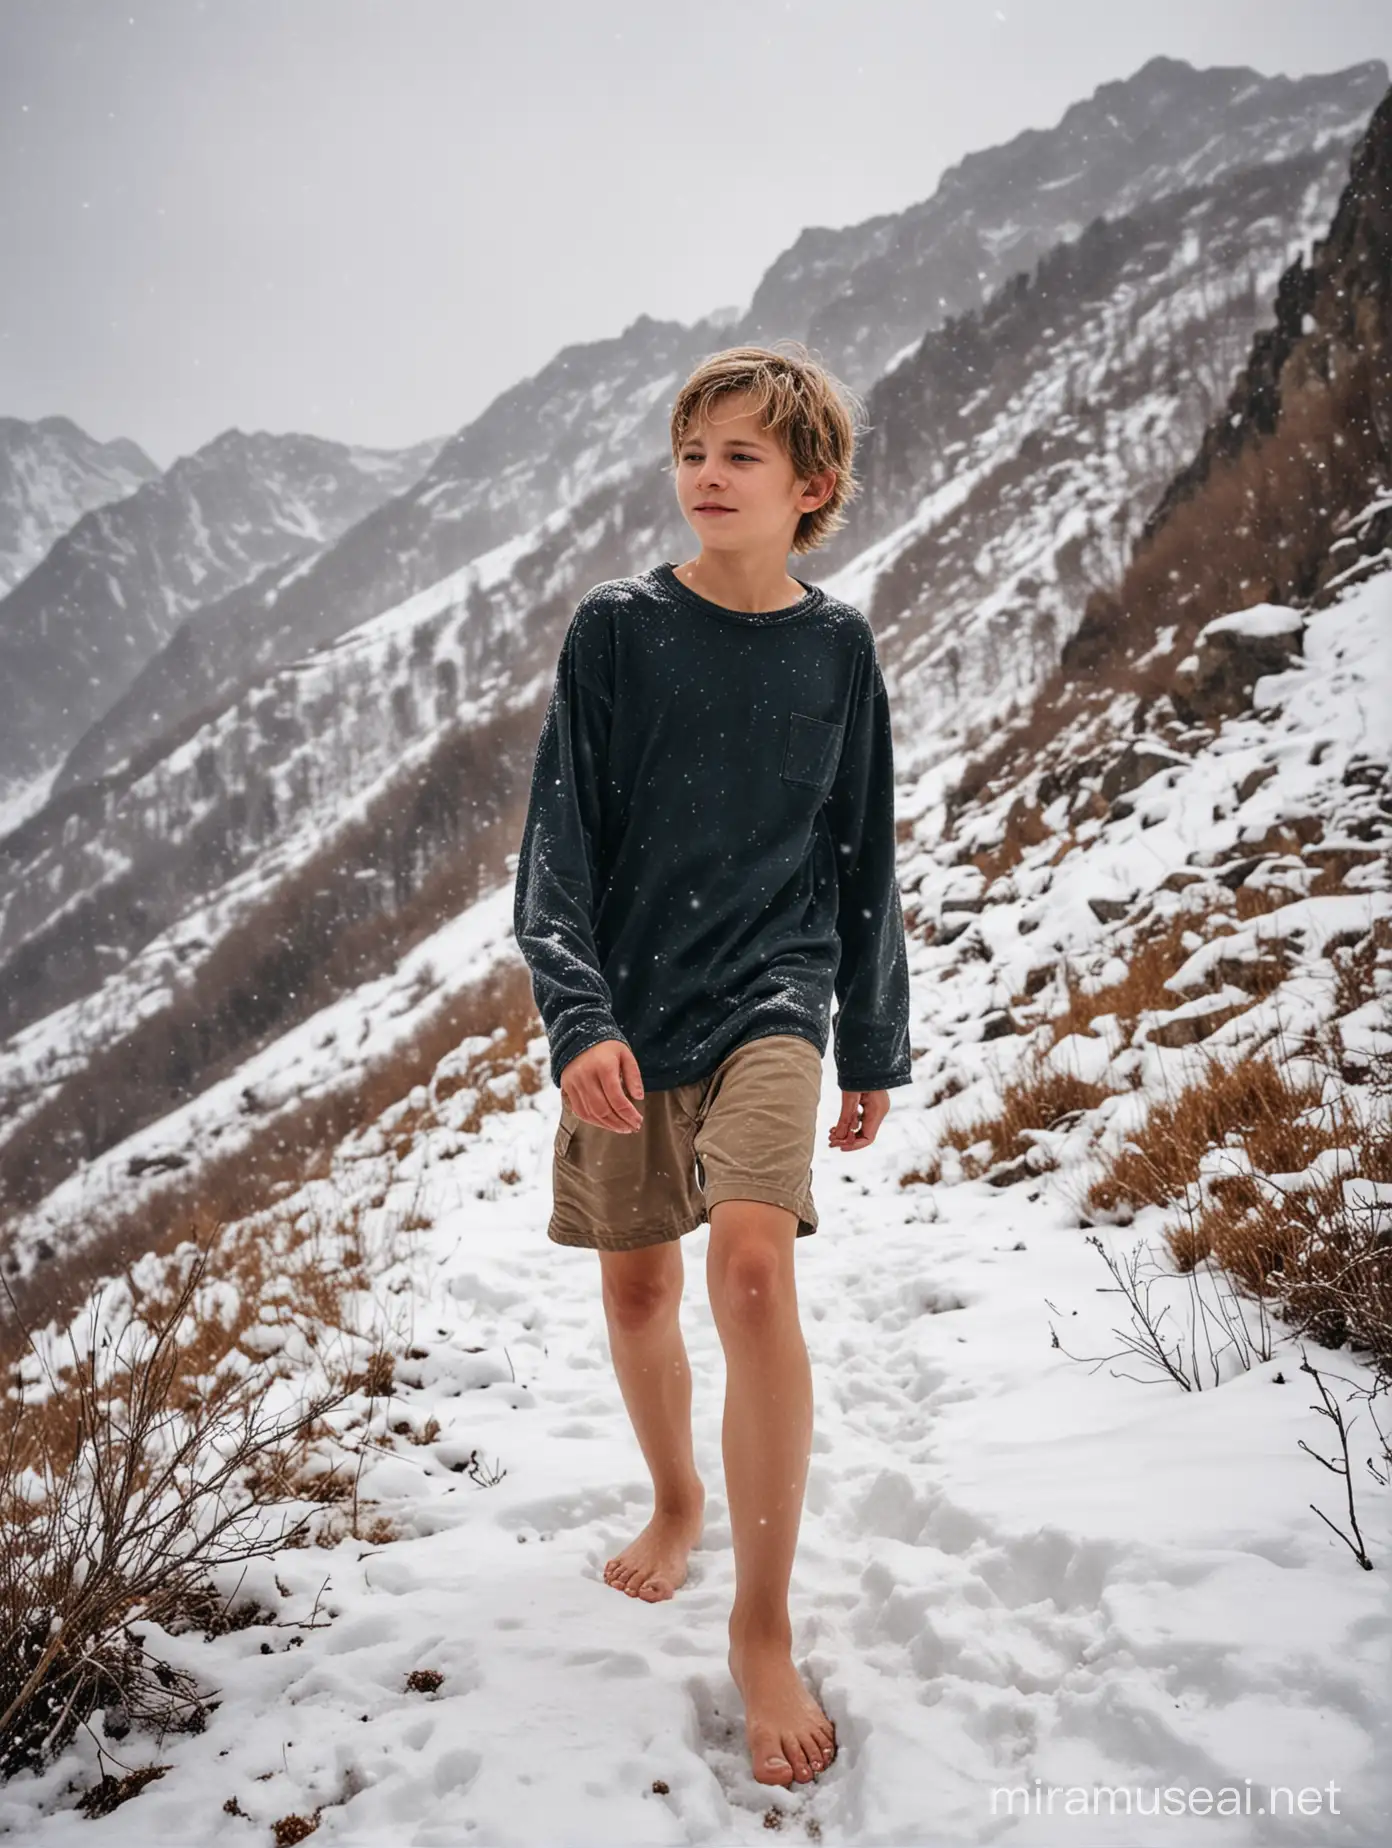 Adventurous Teenage Boy Walking Barefoot Through Snowy Mountains